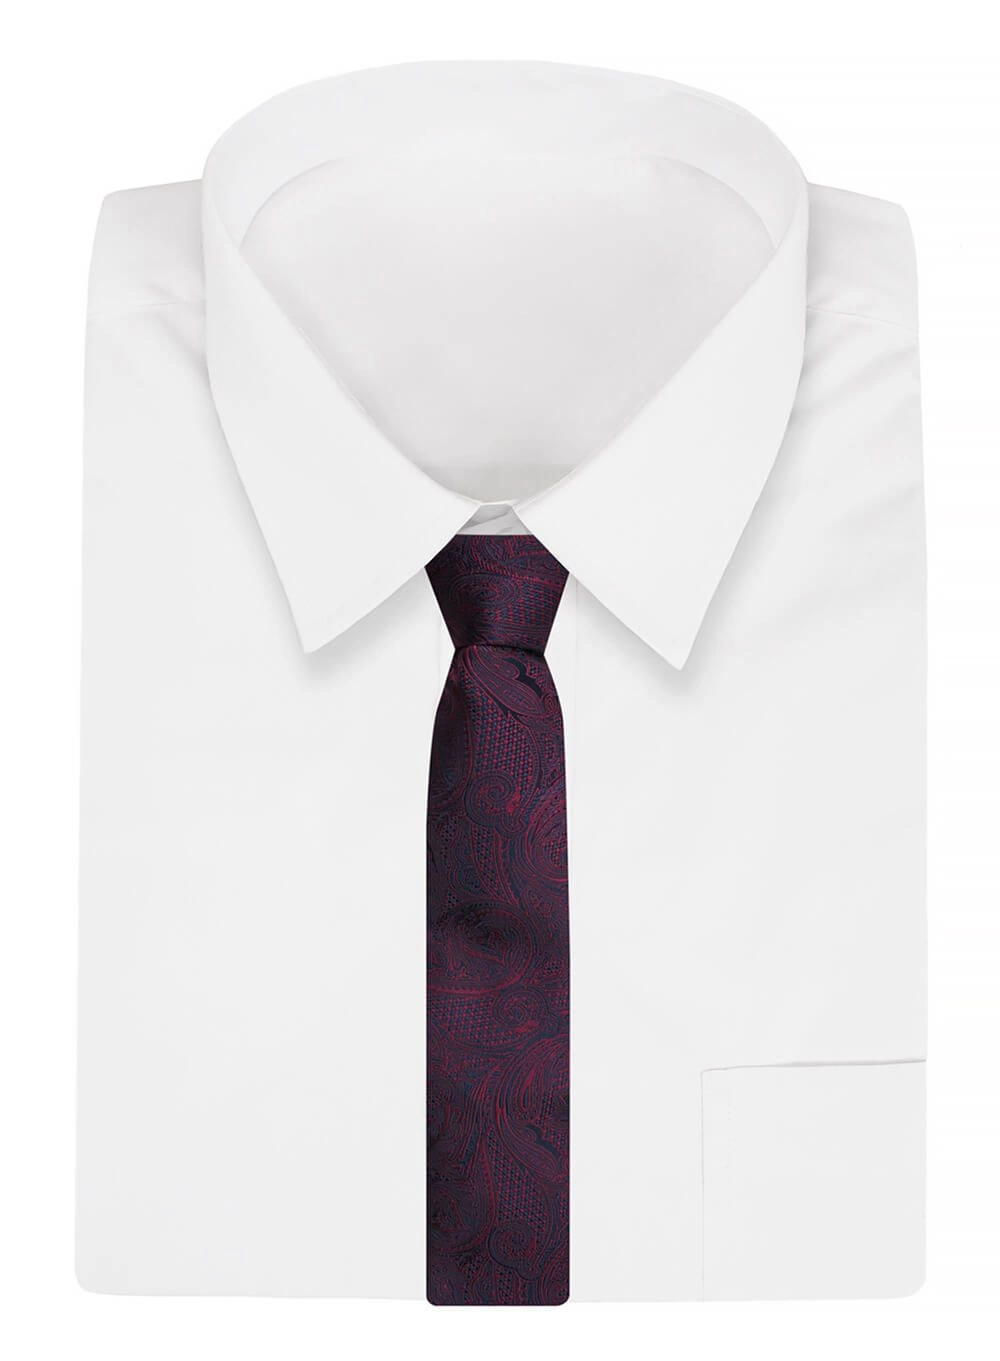 Krawat Alties (7 cm) - Ciemnobugrundowy, Wzór Paisley 